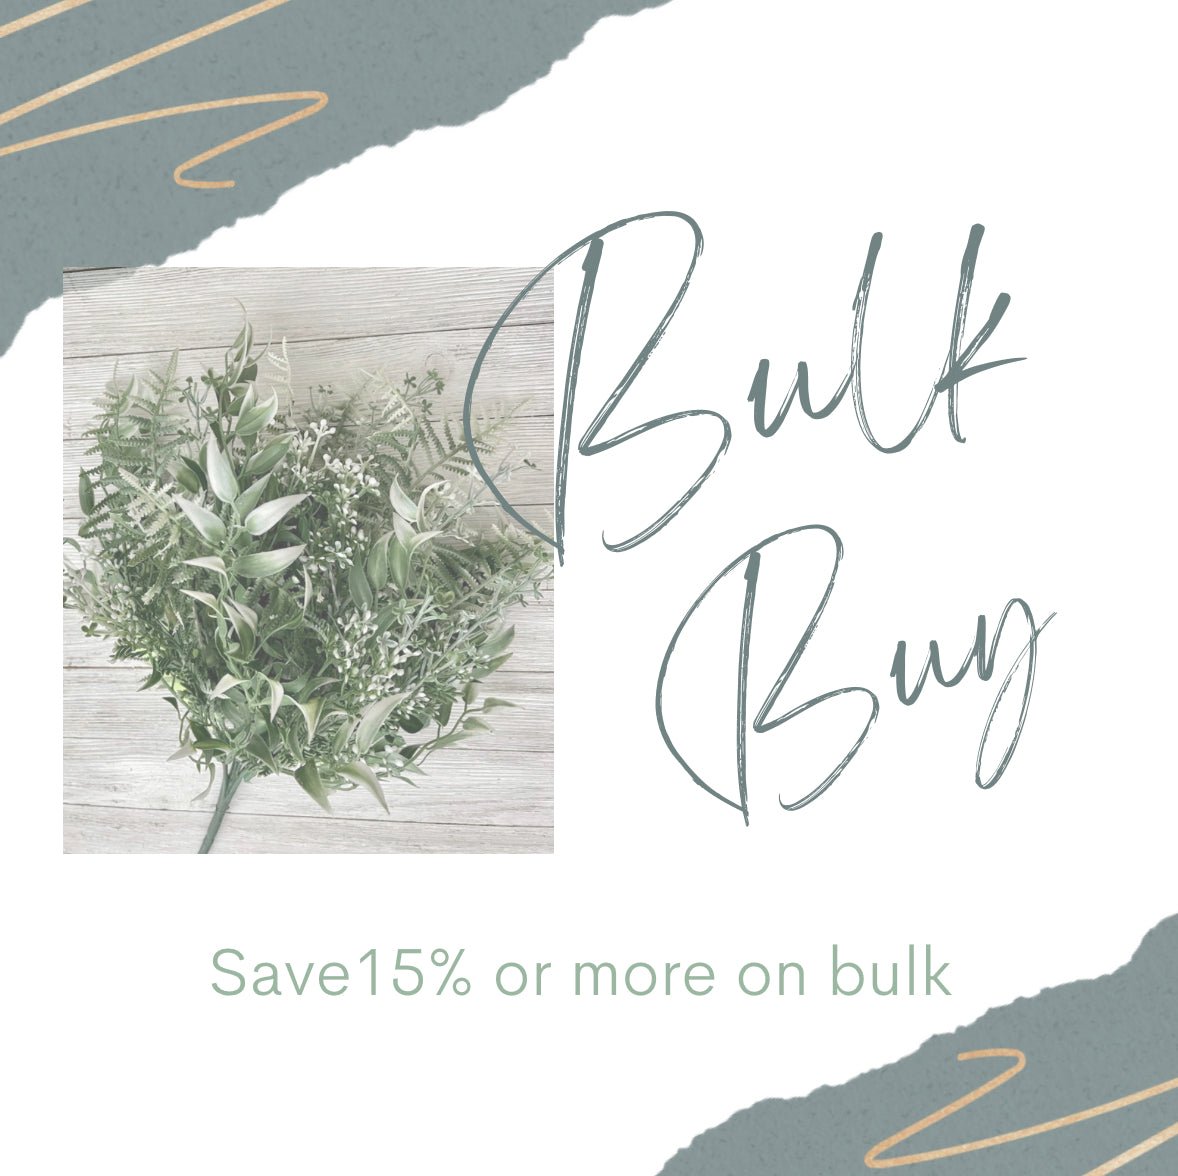 Everyone’s favorite Mixed greenery bush, white tips - Greenery Marketgreenerygm1115 x 12